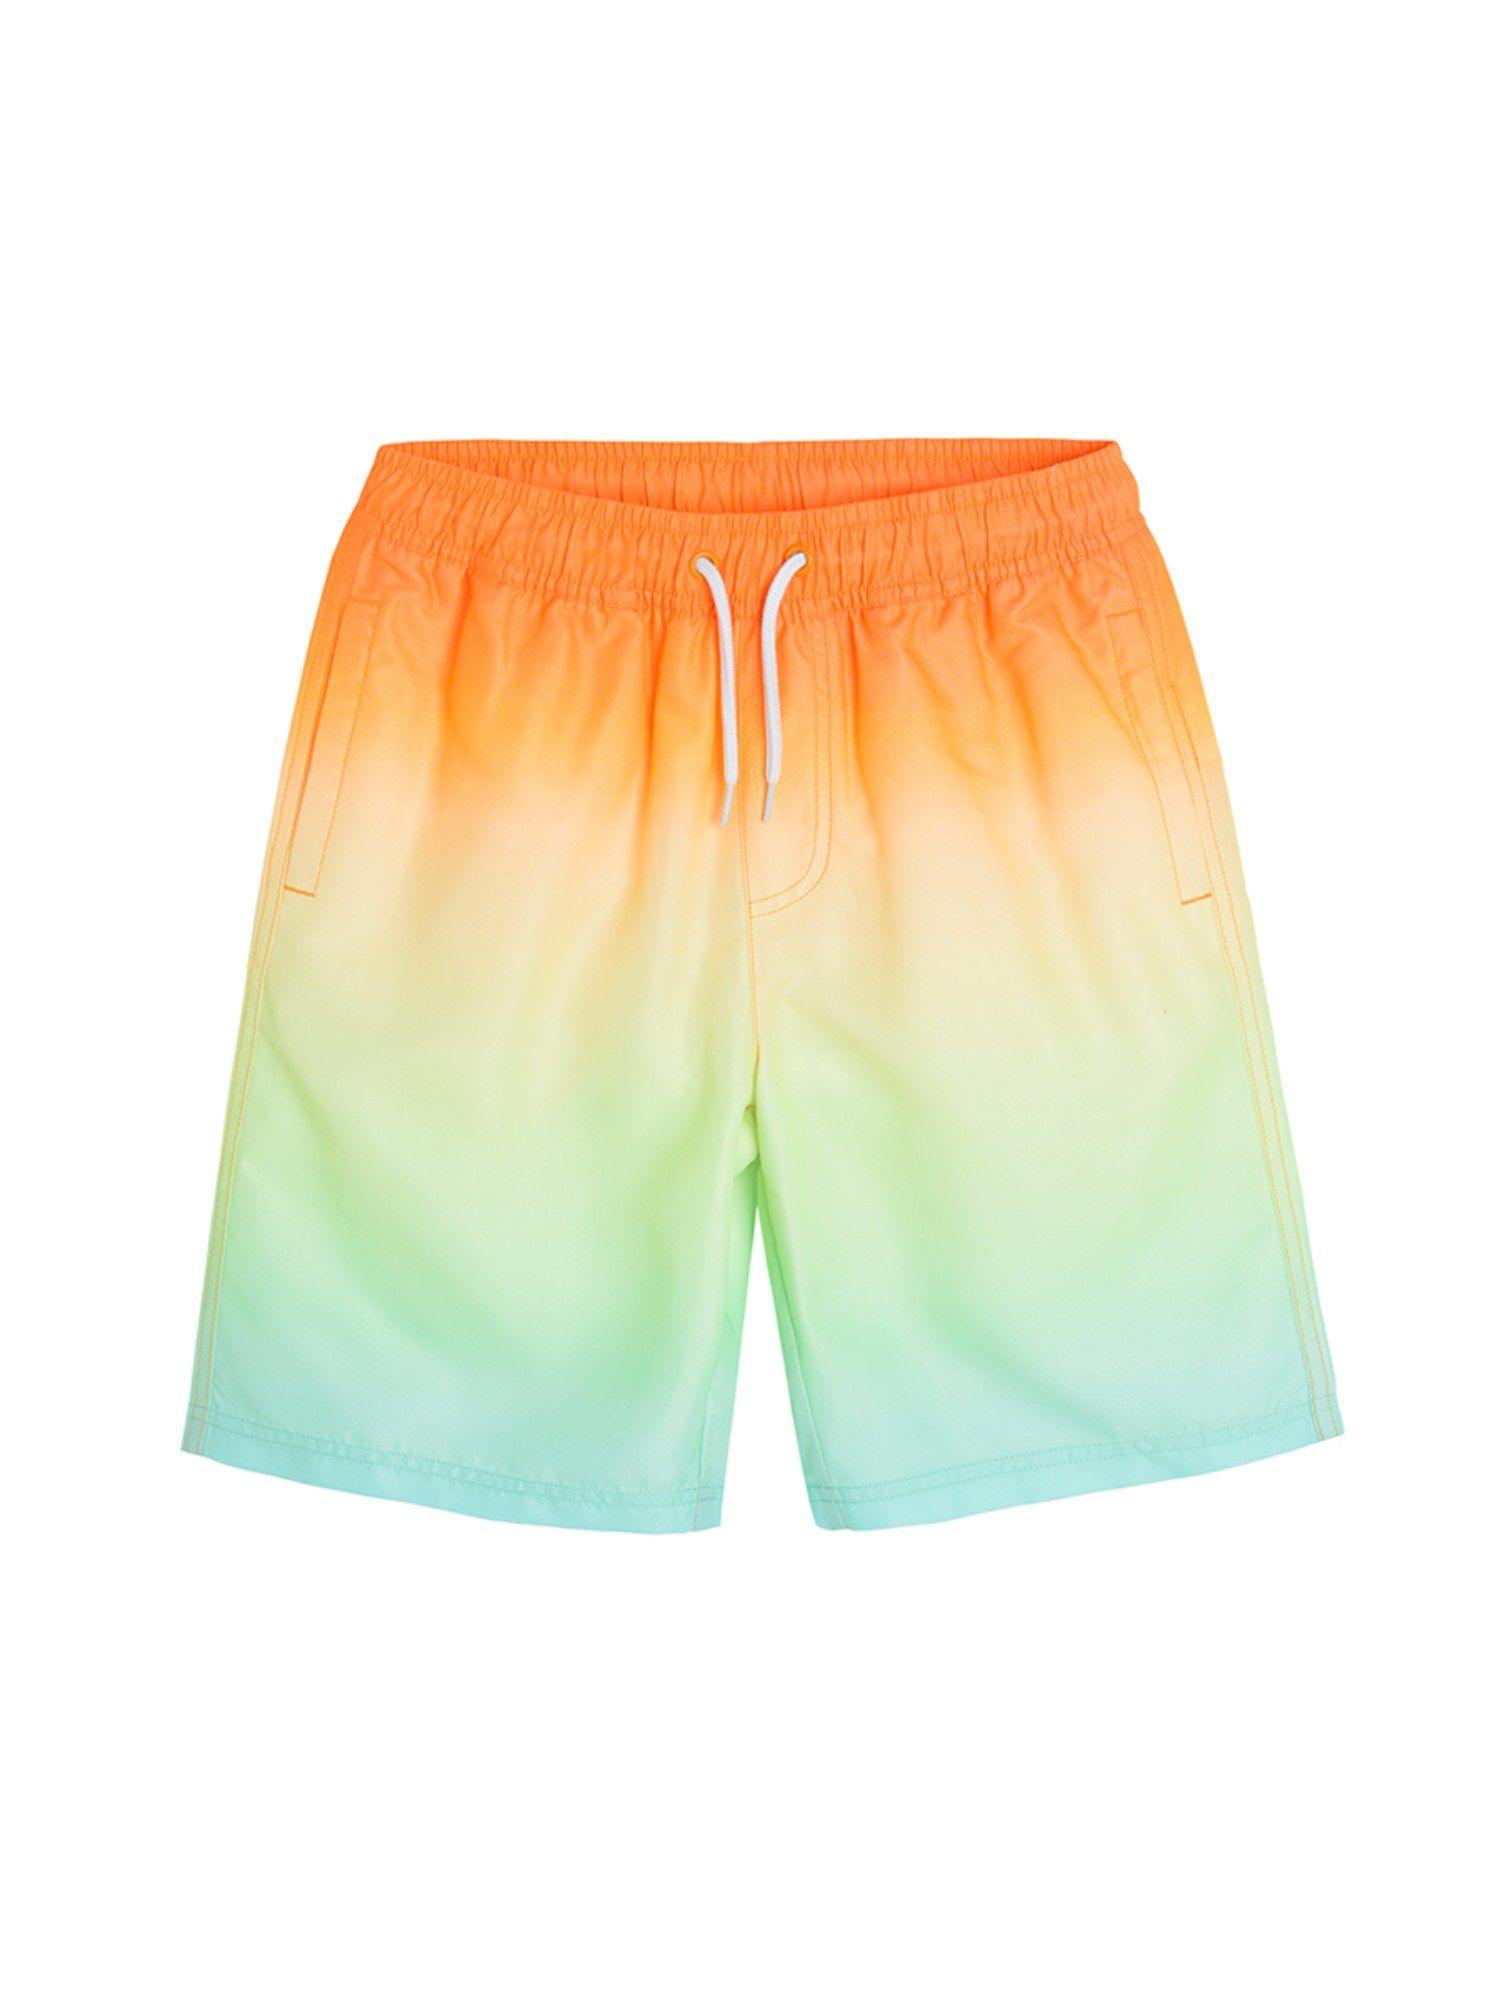 smyk boys orange swimwear shorts